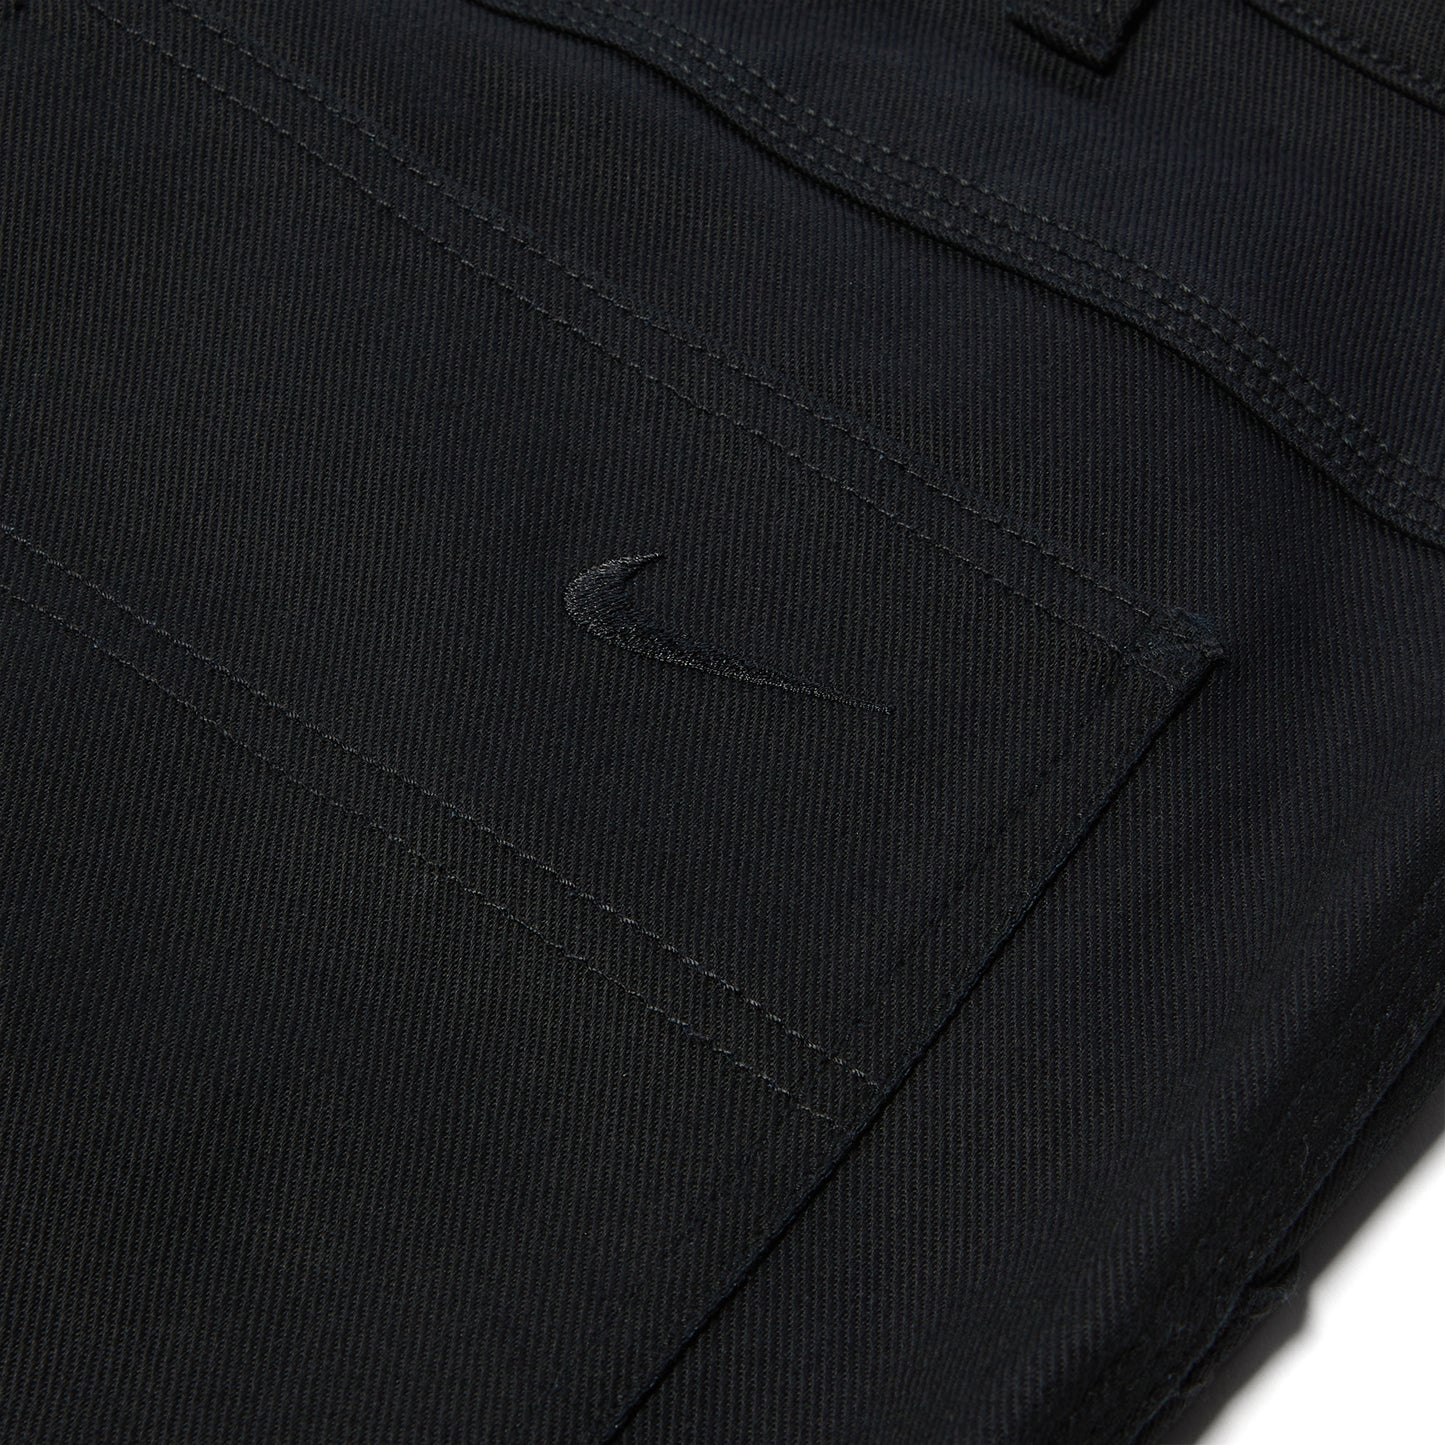 Nike Life Carpenter Pants (Black)